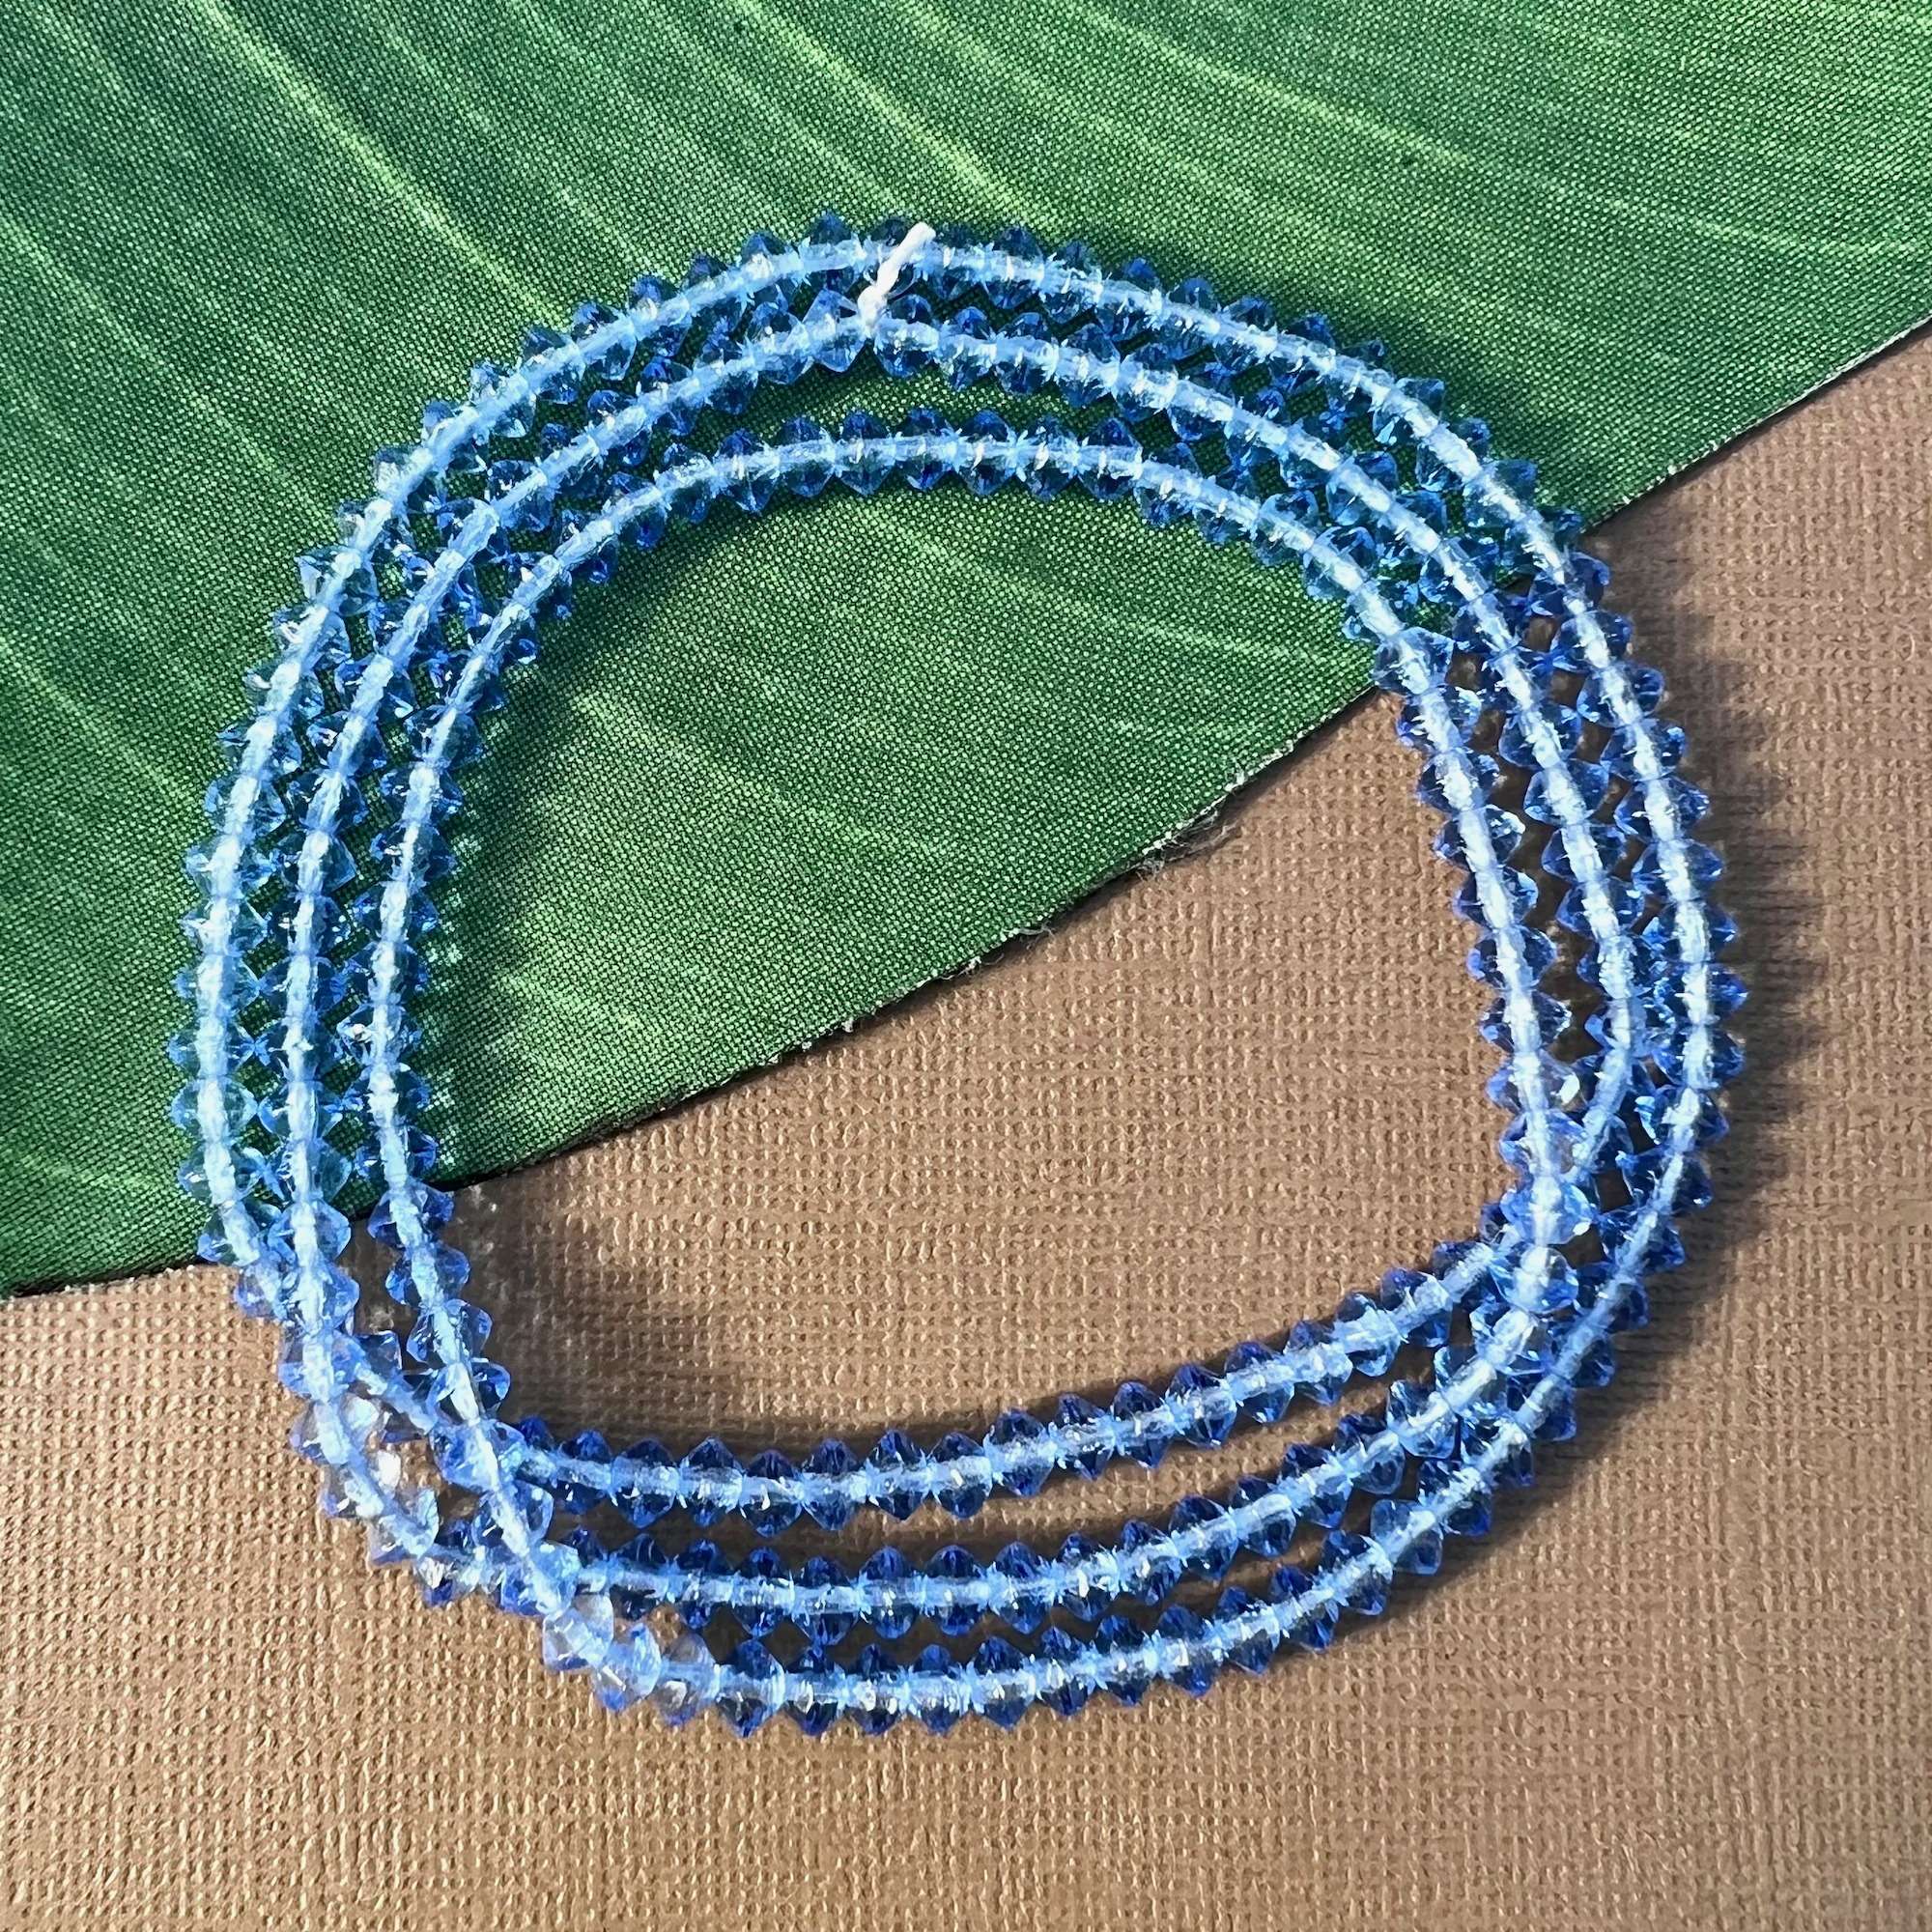 Small Blue Bi-Cone Beads - 200 Pieces